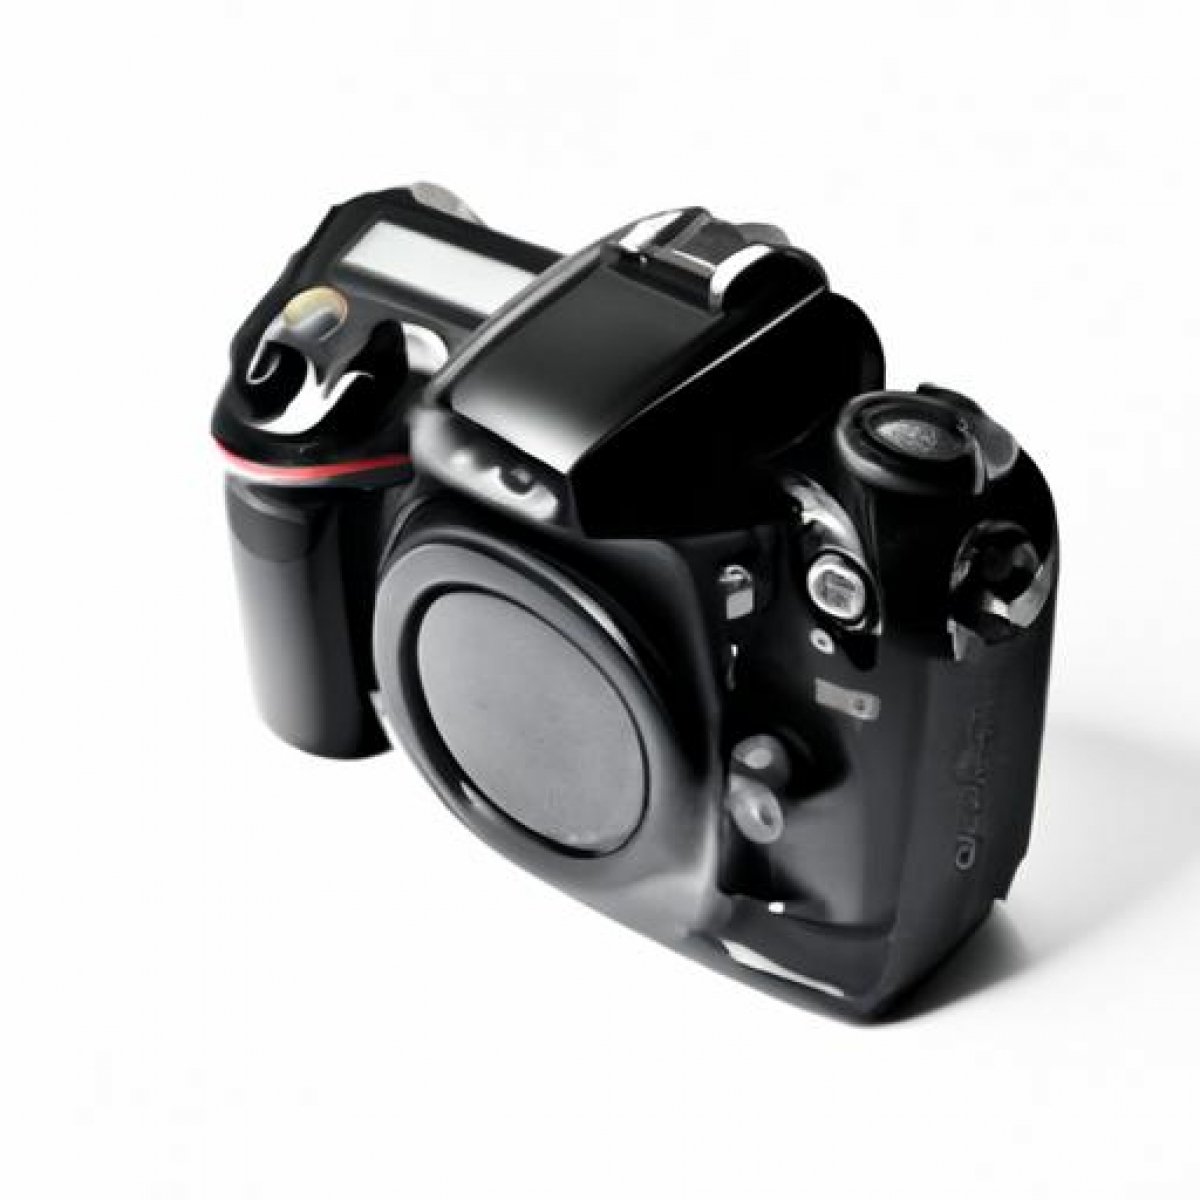 Nikon d200 digital slr camera